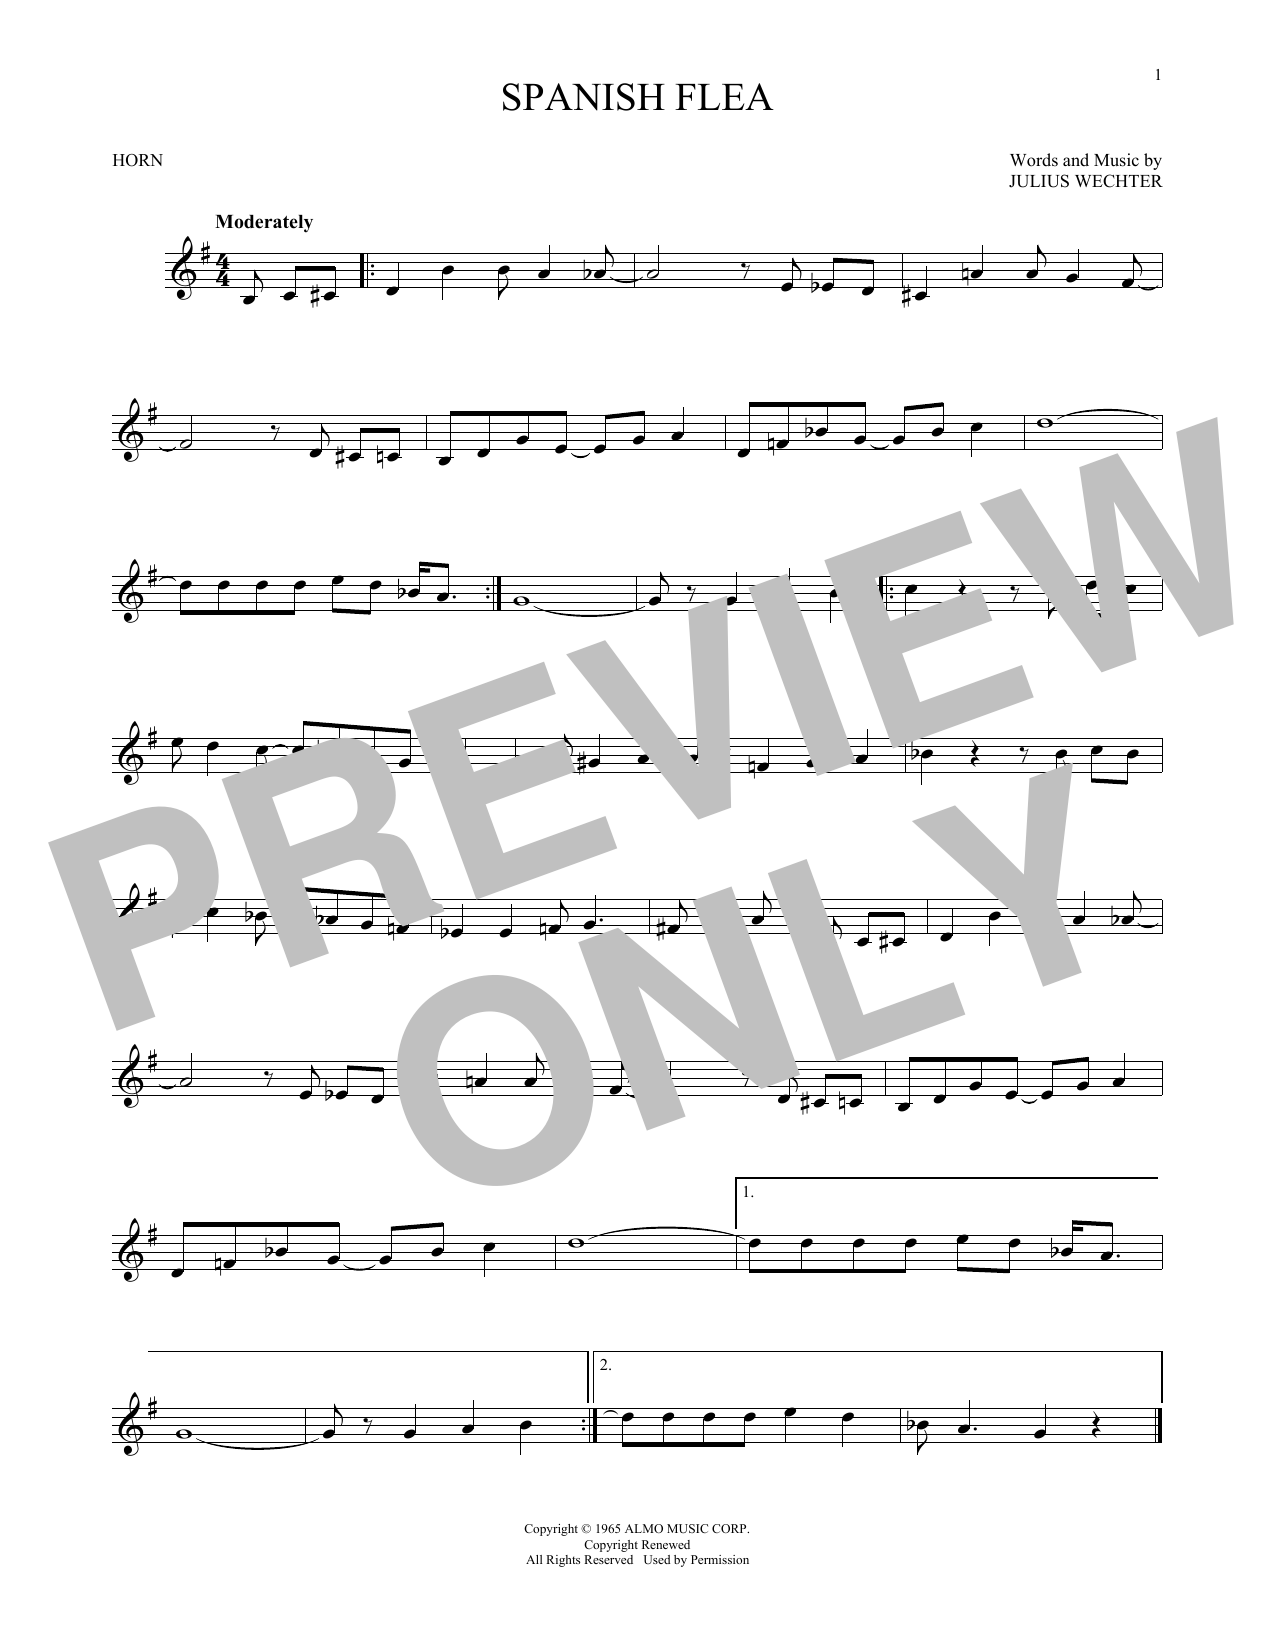 Herb Alpert & The Tijuana Brass Band Spanish Flea Sheet Music Notes & Chords for Trumpet - Download or Print PDF